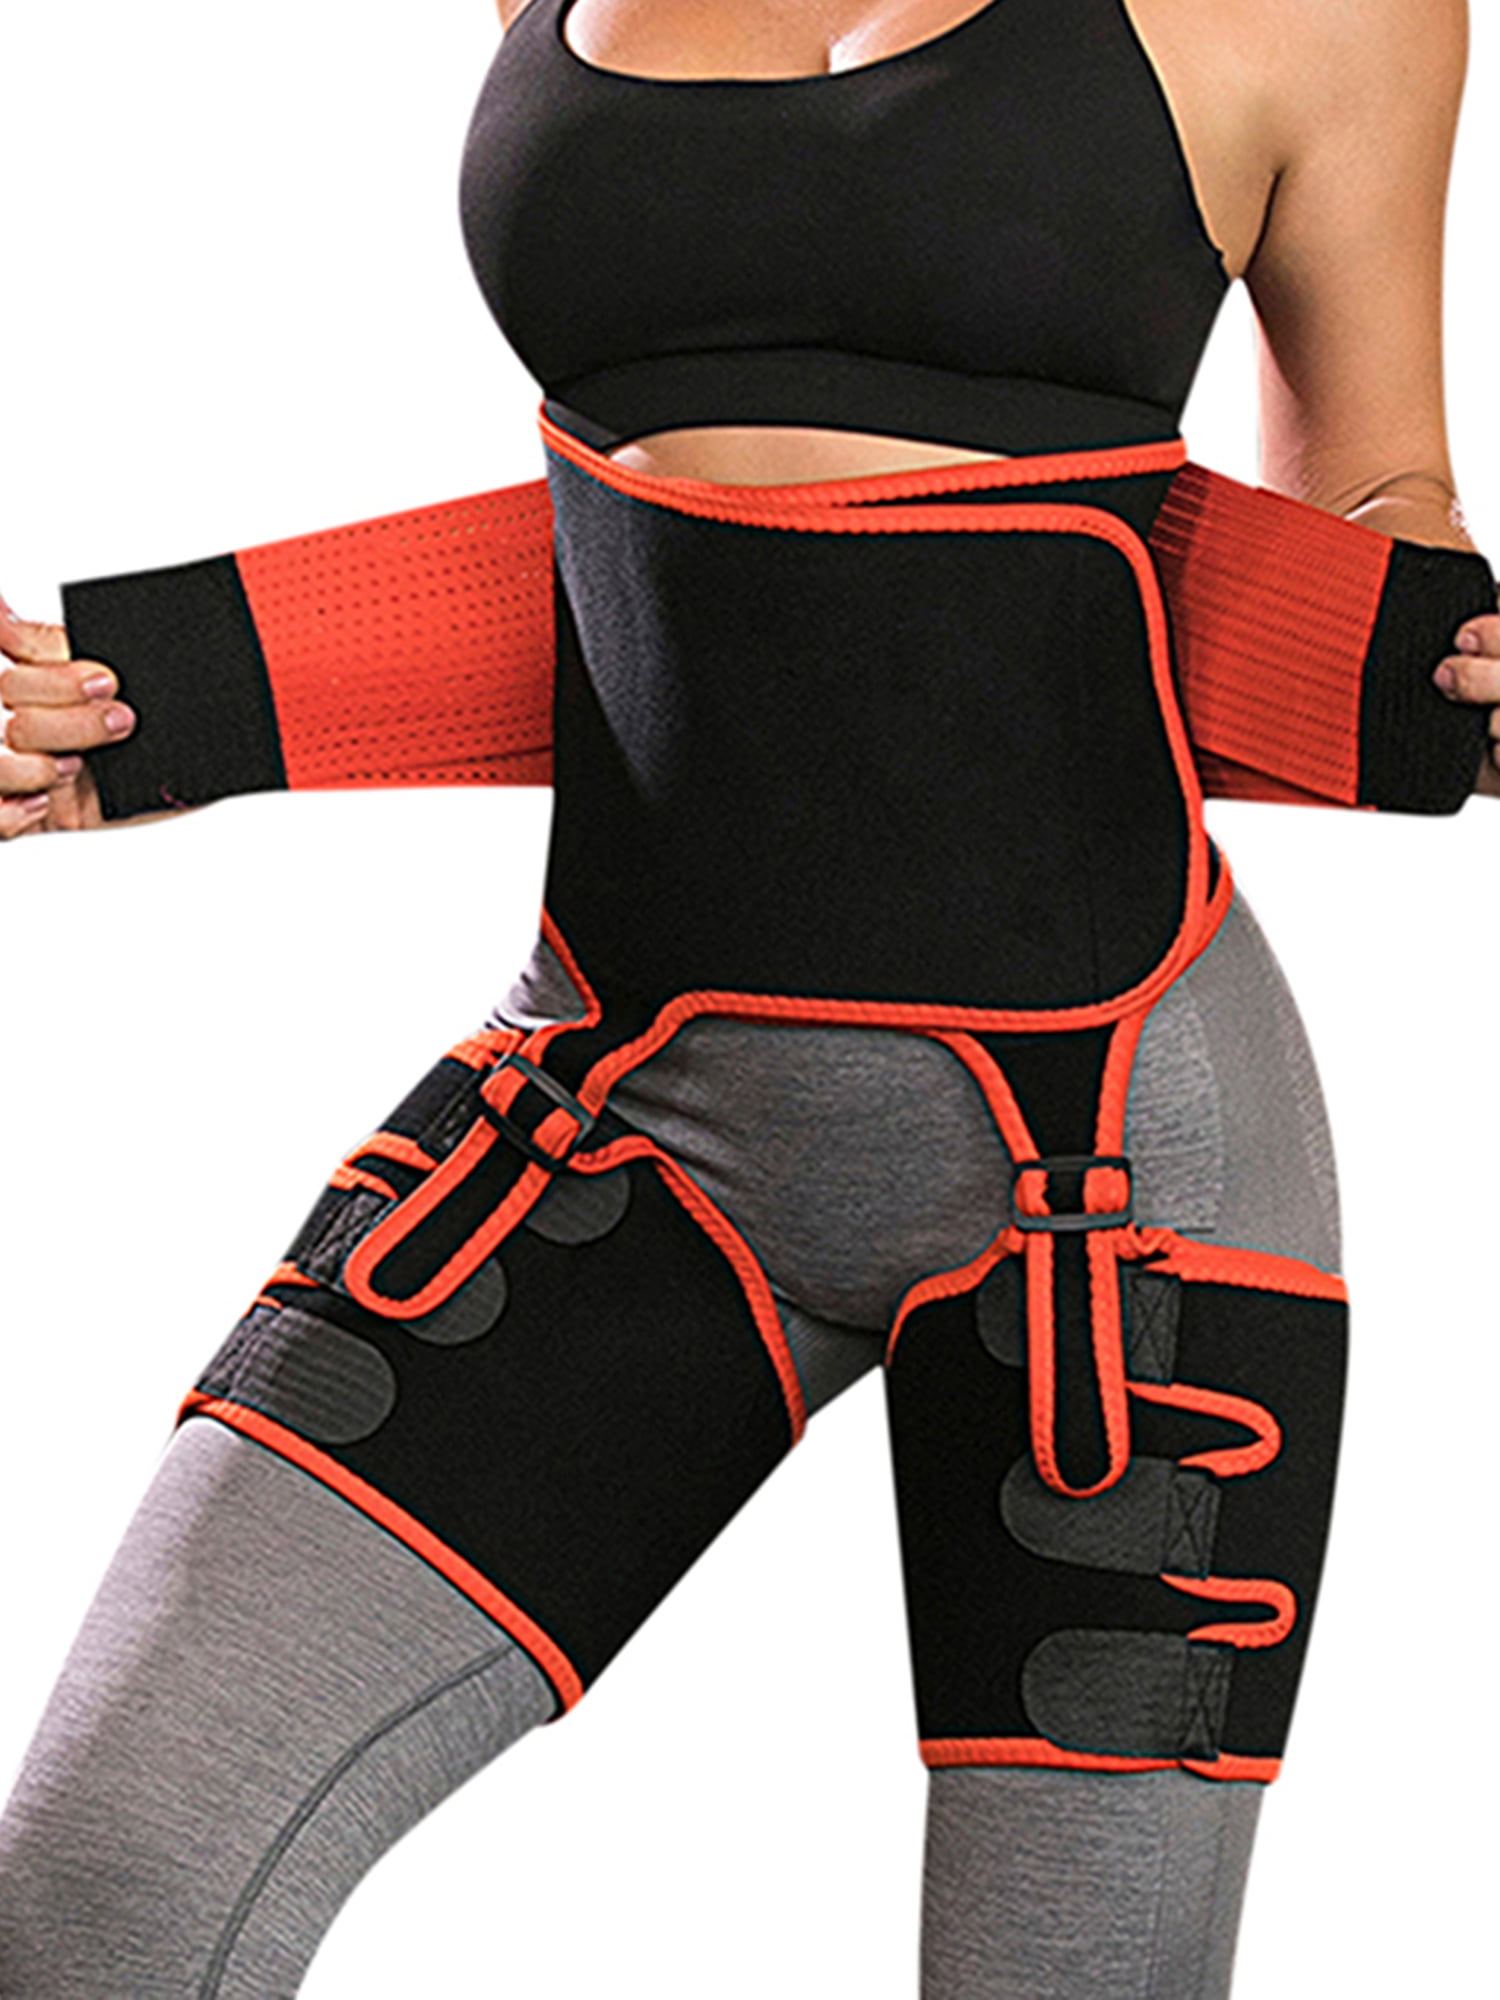 Thigh Trimmer,Fitness Weight Butt Lifter Slimming 3 in 1 Adjustable Hip Enhancer Hips Belt Trimmer for Women Body Shaper Workout Fitness Training DAWNDEW 2020 Upgraded Waist Trainer for Women